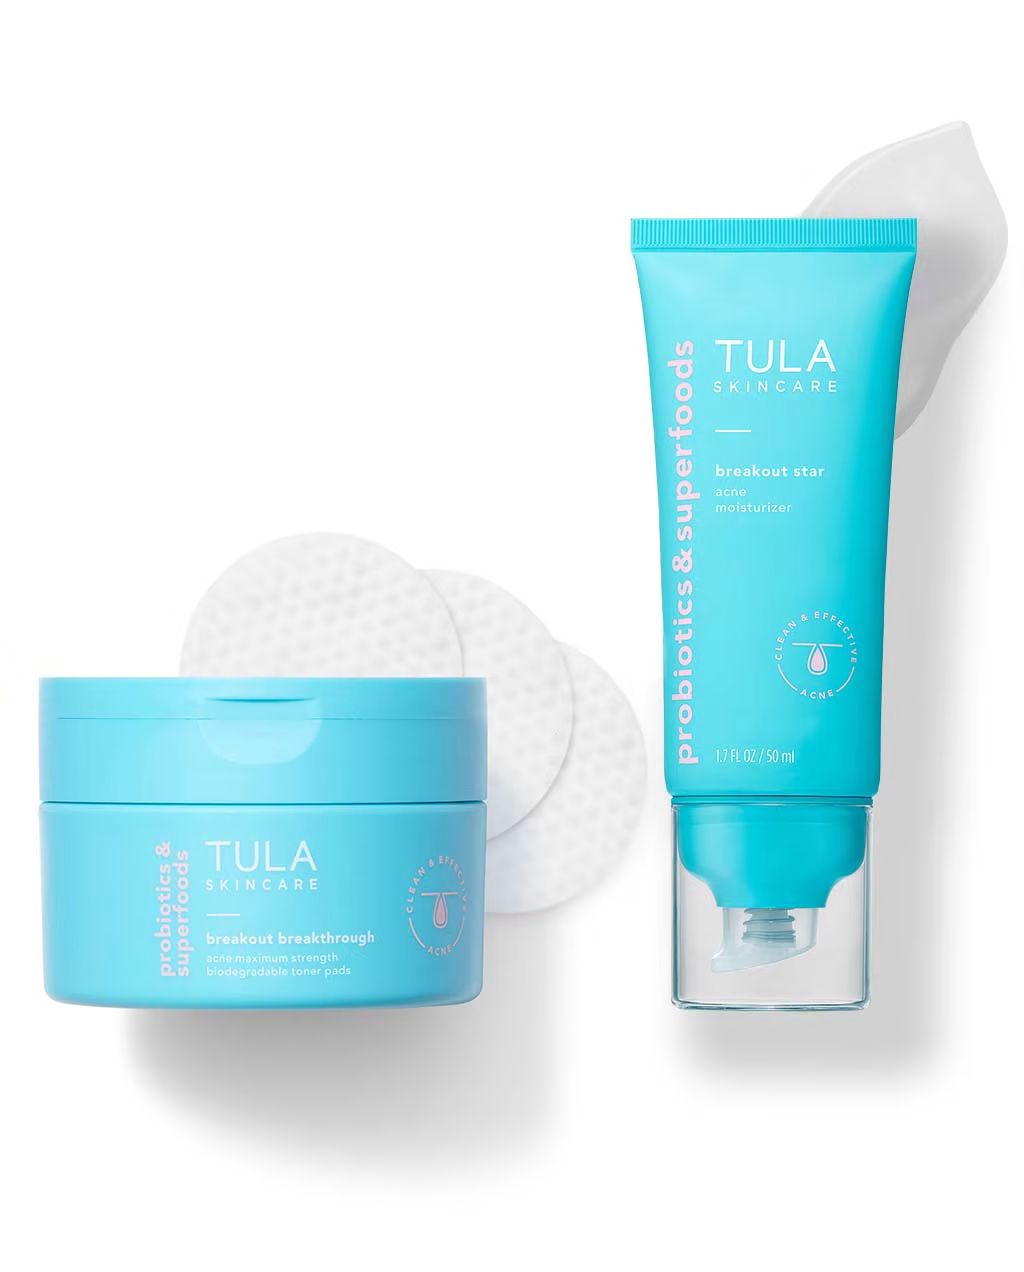 acne fighting routine | Tula Skincare